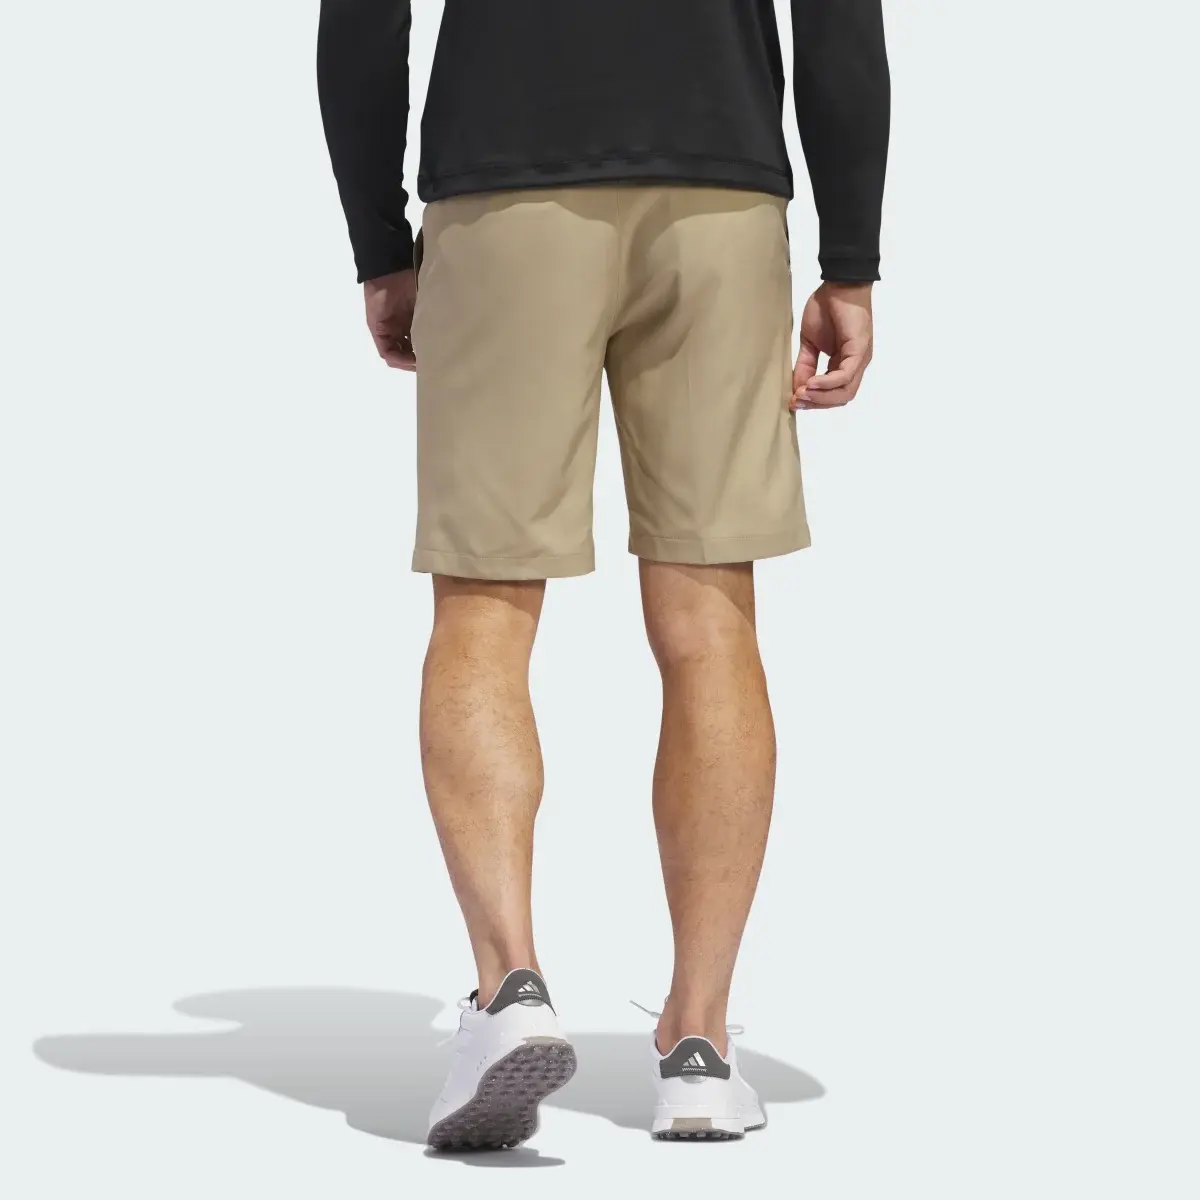 Adidas Adi Advantage Golf Shorts. 2